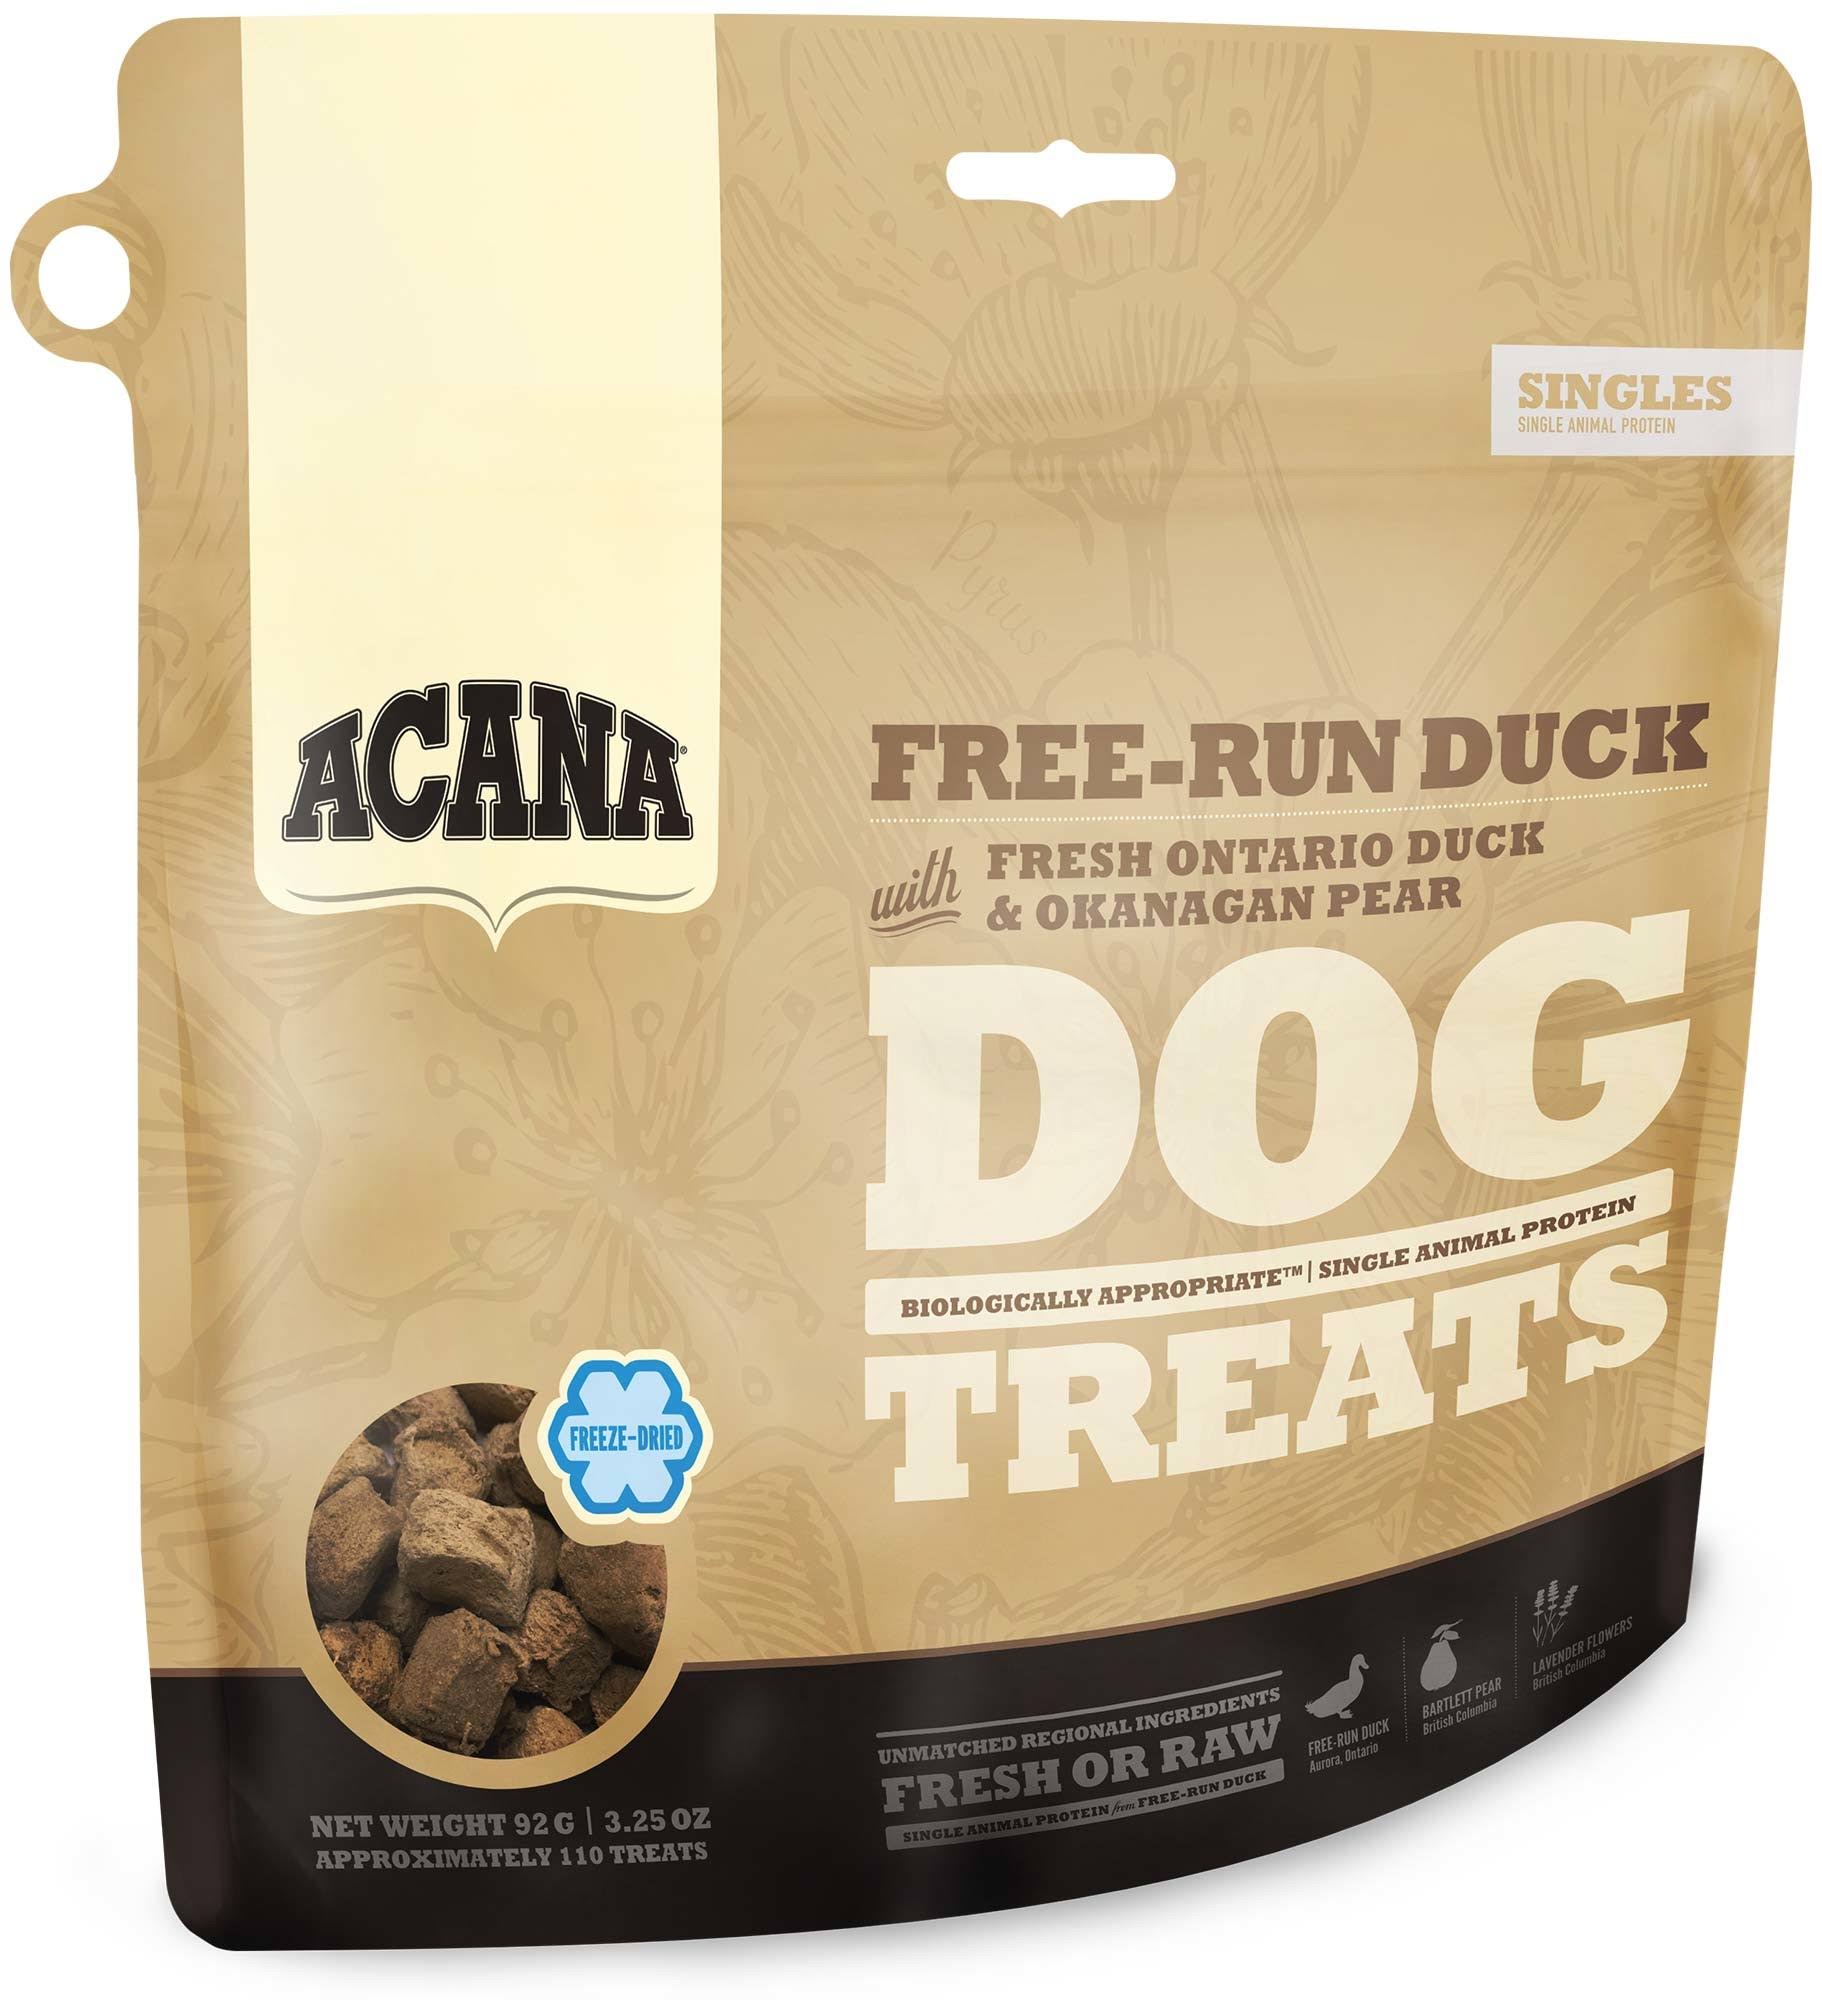 Acana Singles Freeze Dried Treats Dog - Free-Run Duck - 92g